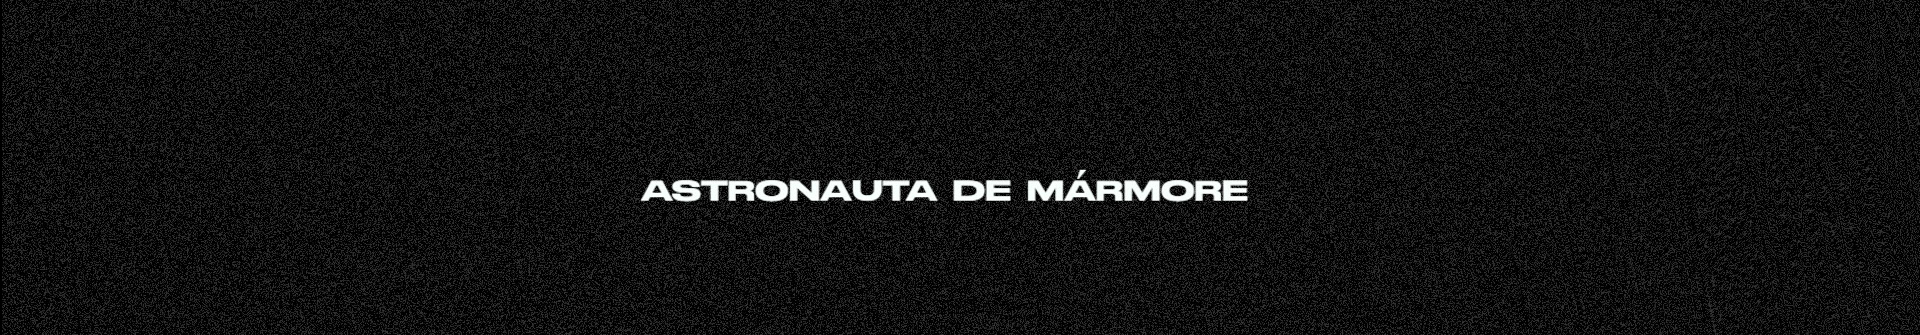 Banner de perfil de ASTRONAUTA DE MÁRMORE